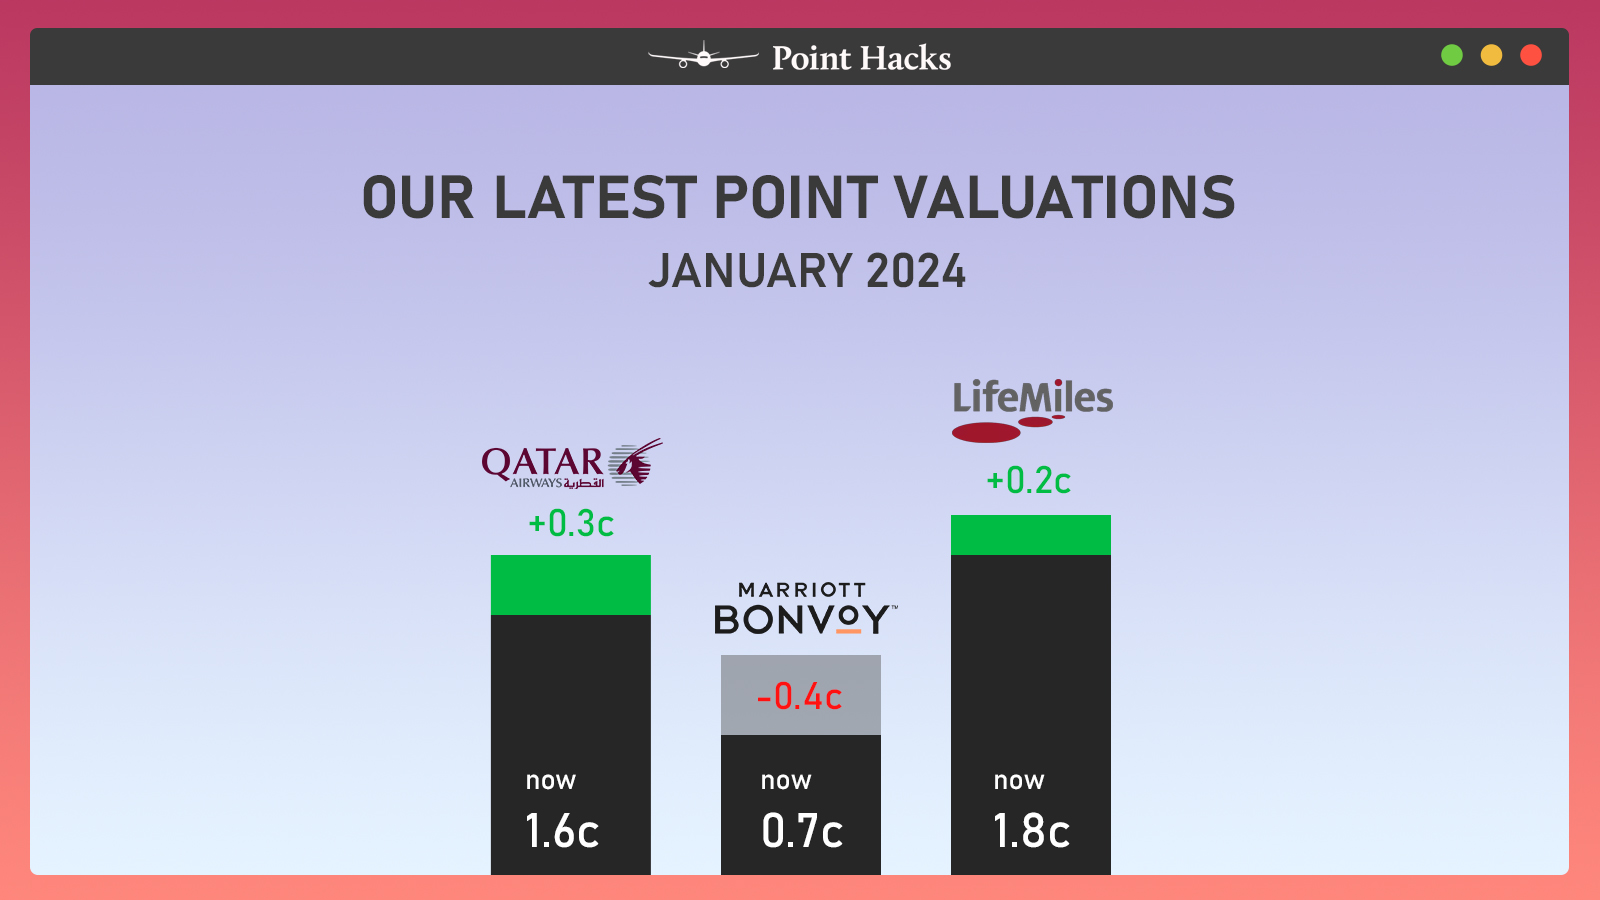 https://i.pointhacks.com/2023/06/16152925/Points-Valuation-January-2024-Point-Hacks.jpg